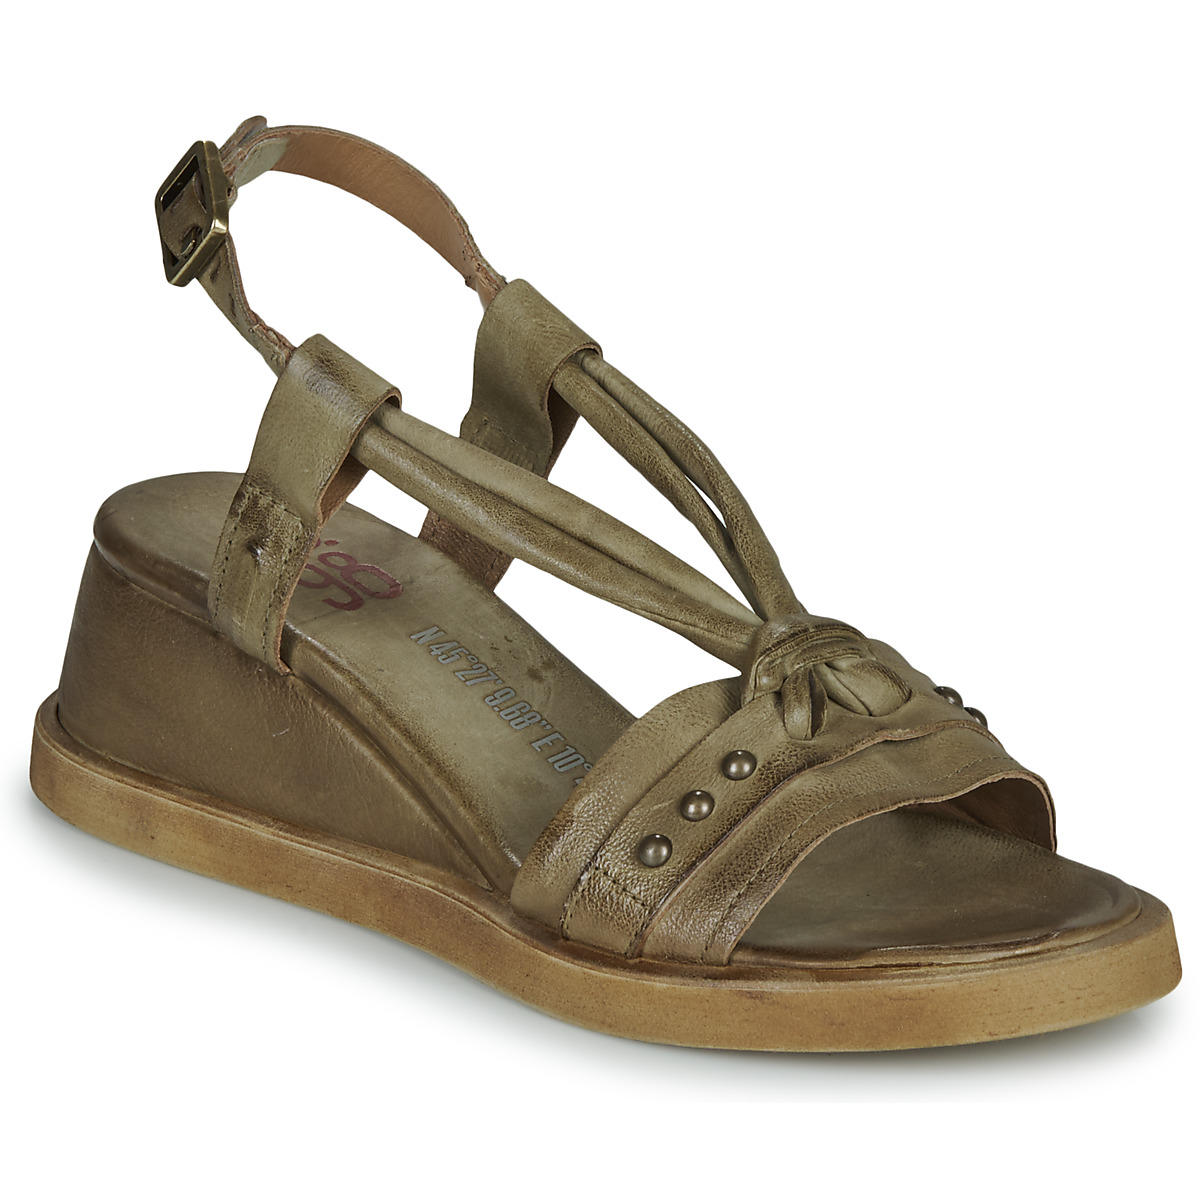 Schuhe Damen Sandalen / Sandaletten Airstep / A.S.98 CORAL STRAP Khaki